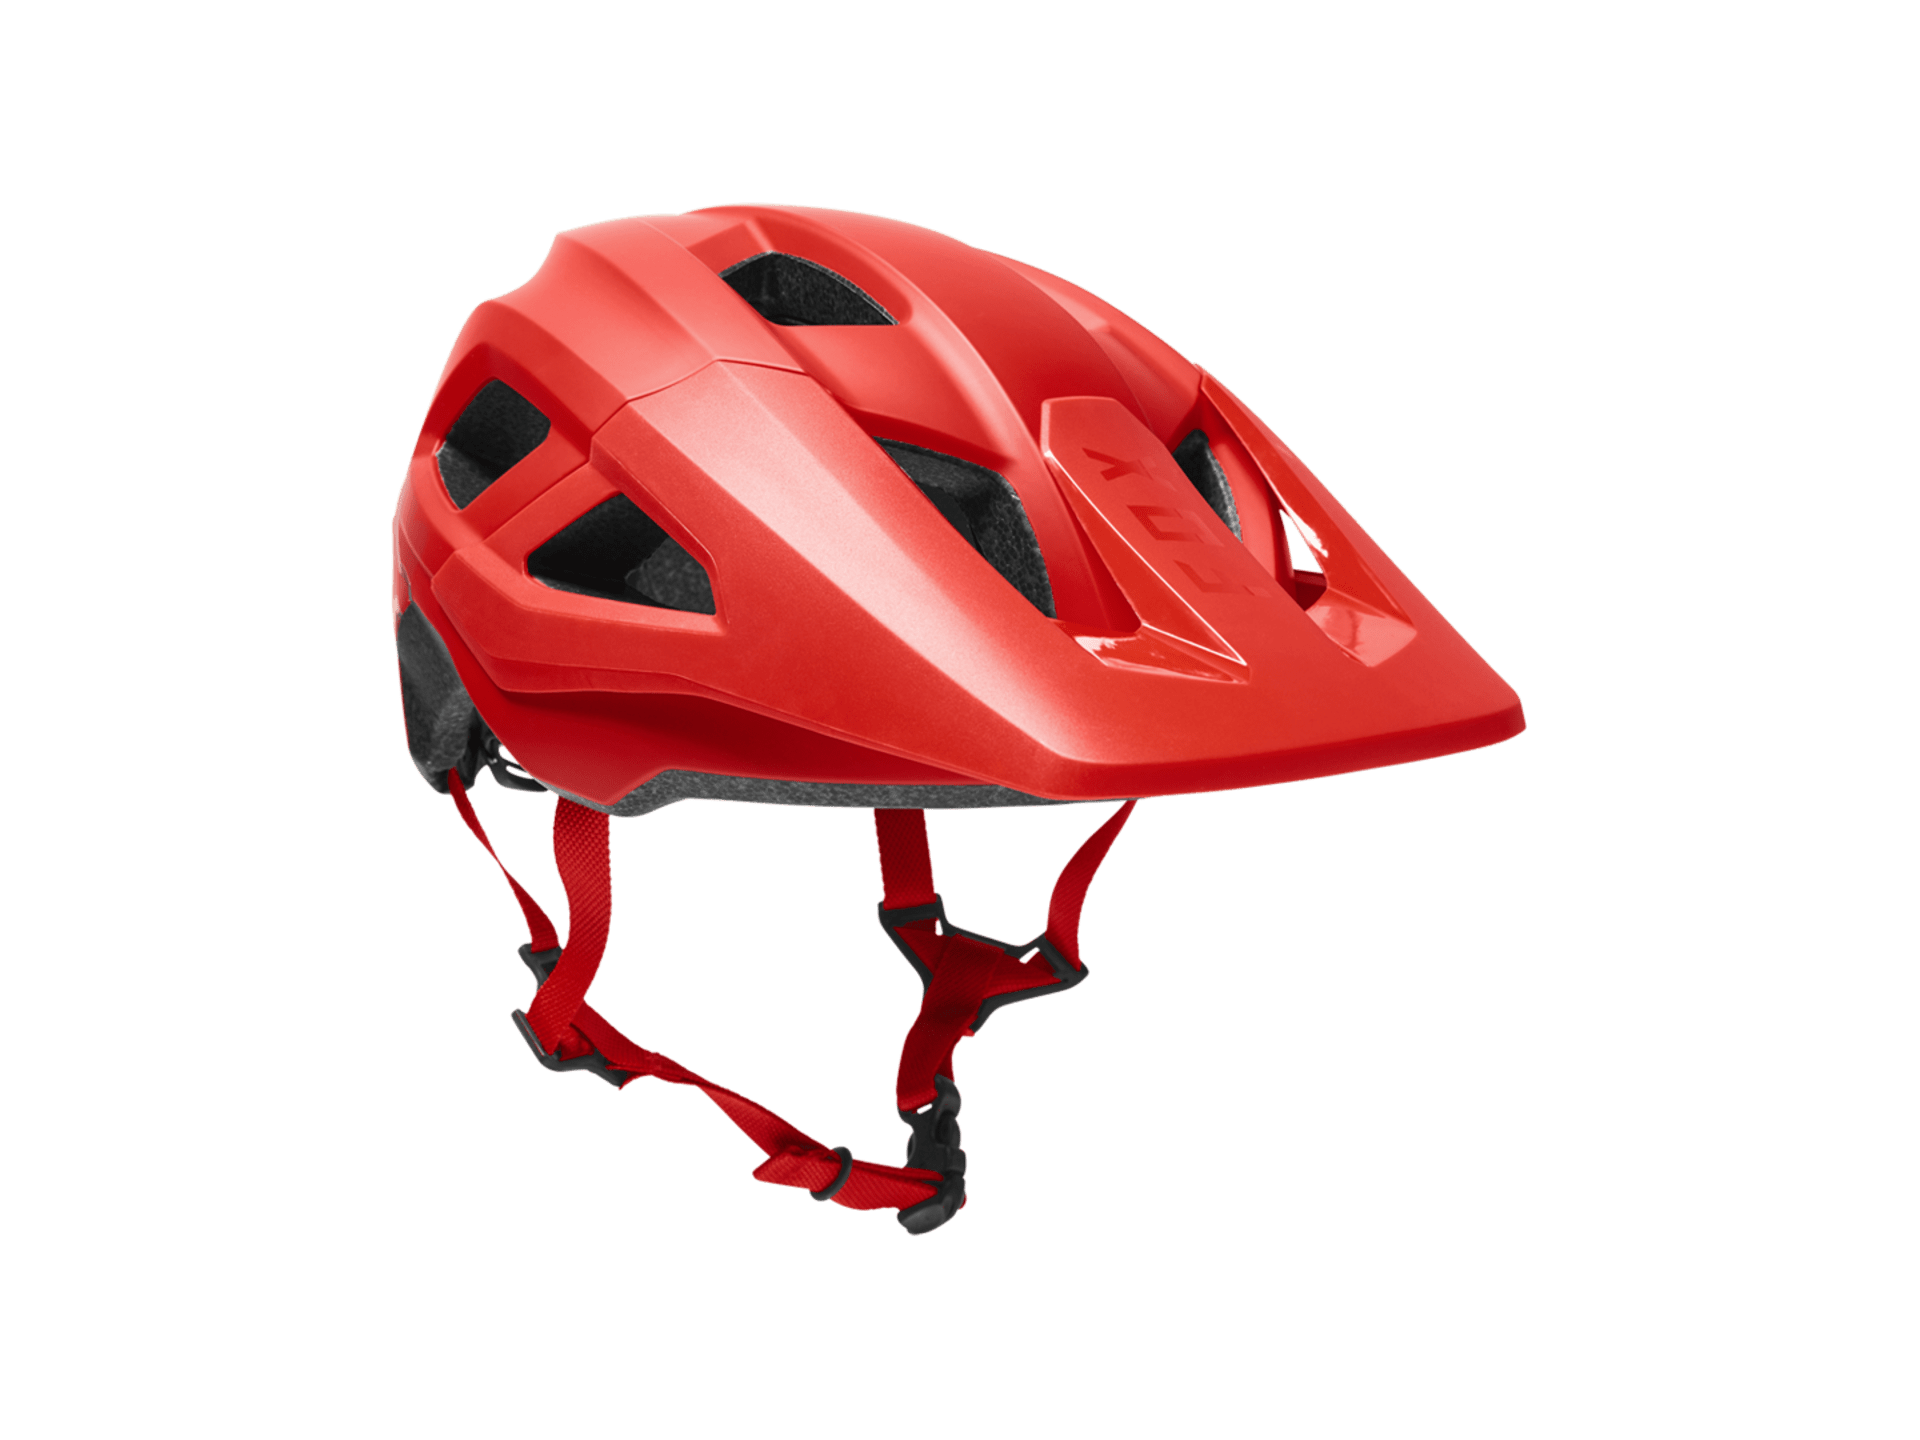 Fox Racing Mainframe Youth Bike Helmet